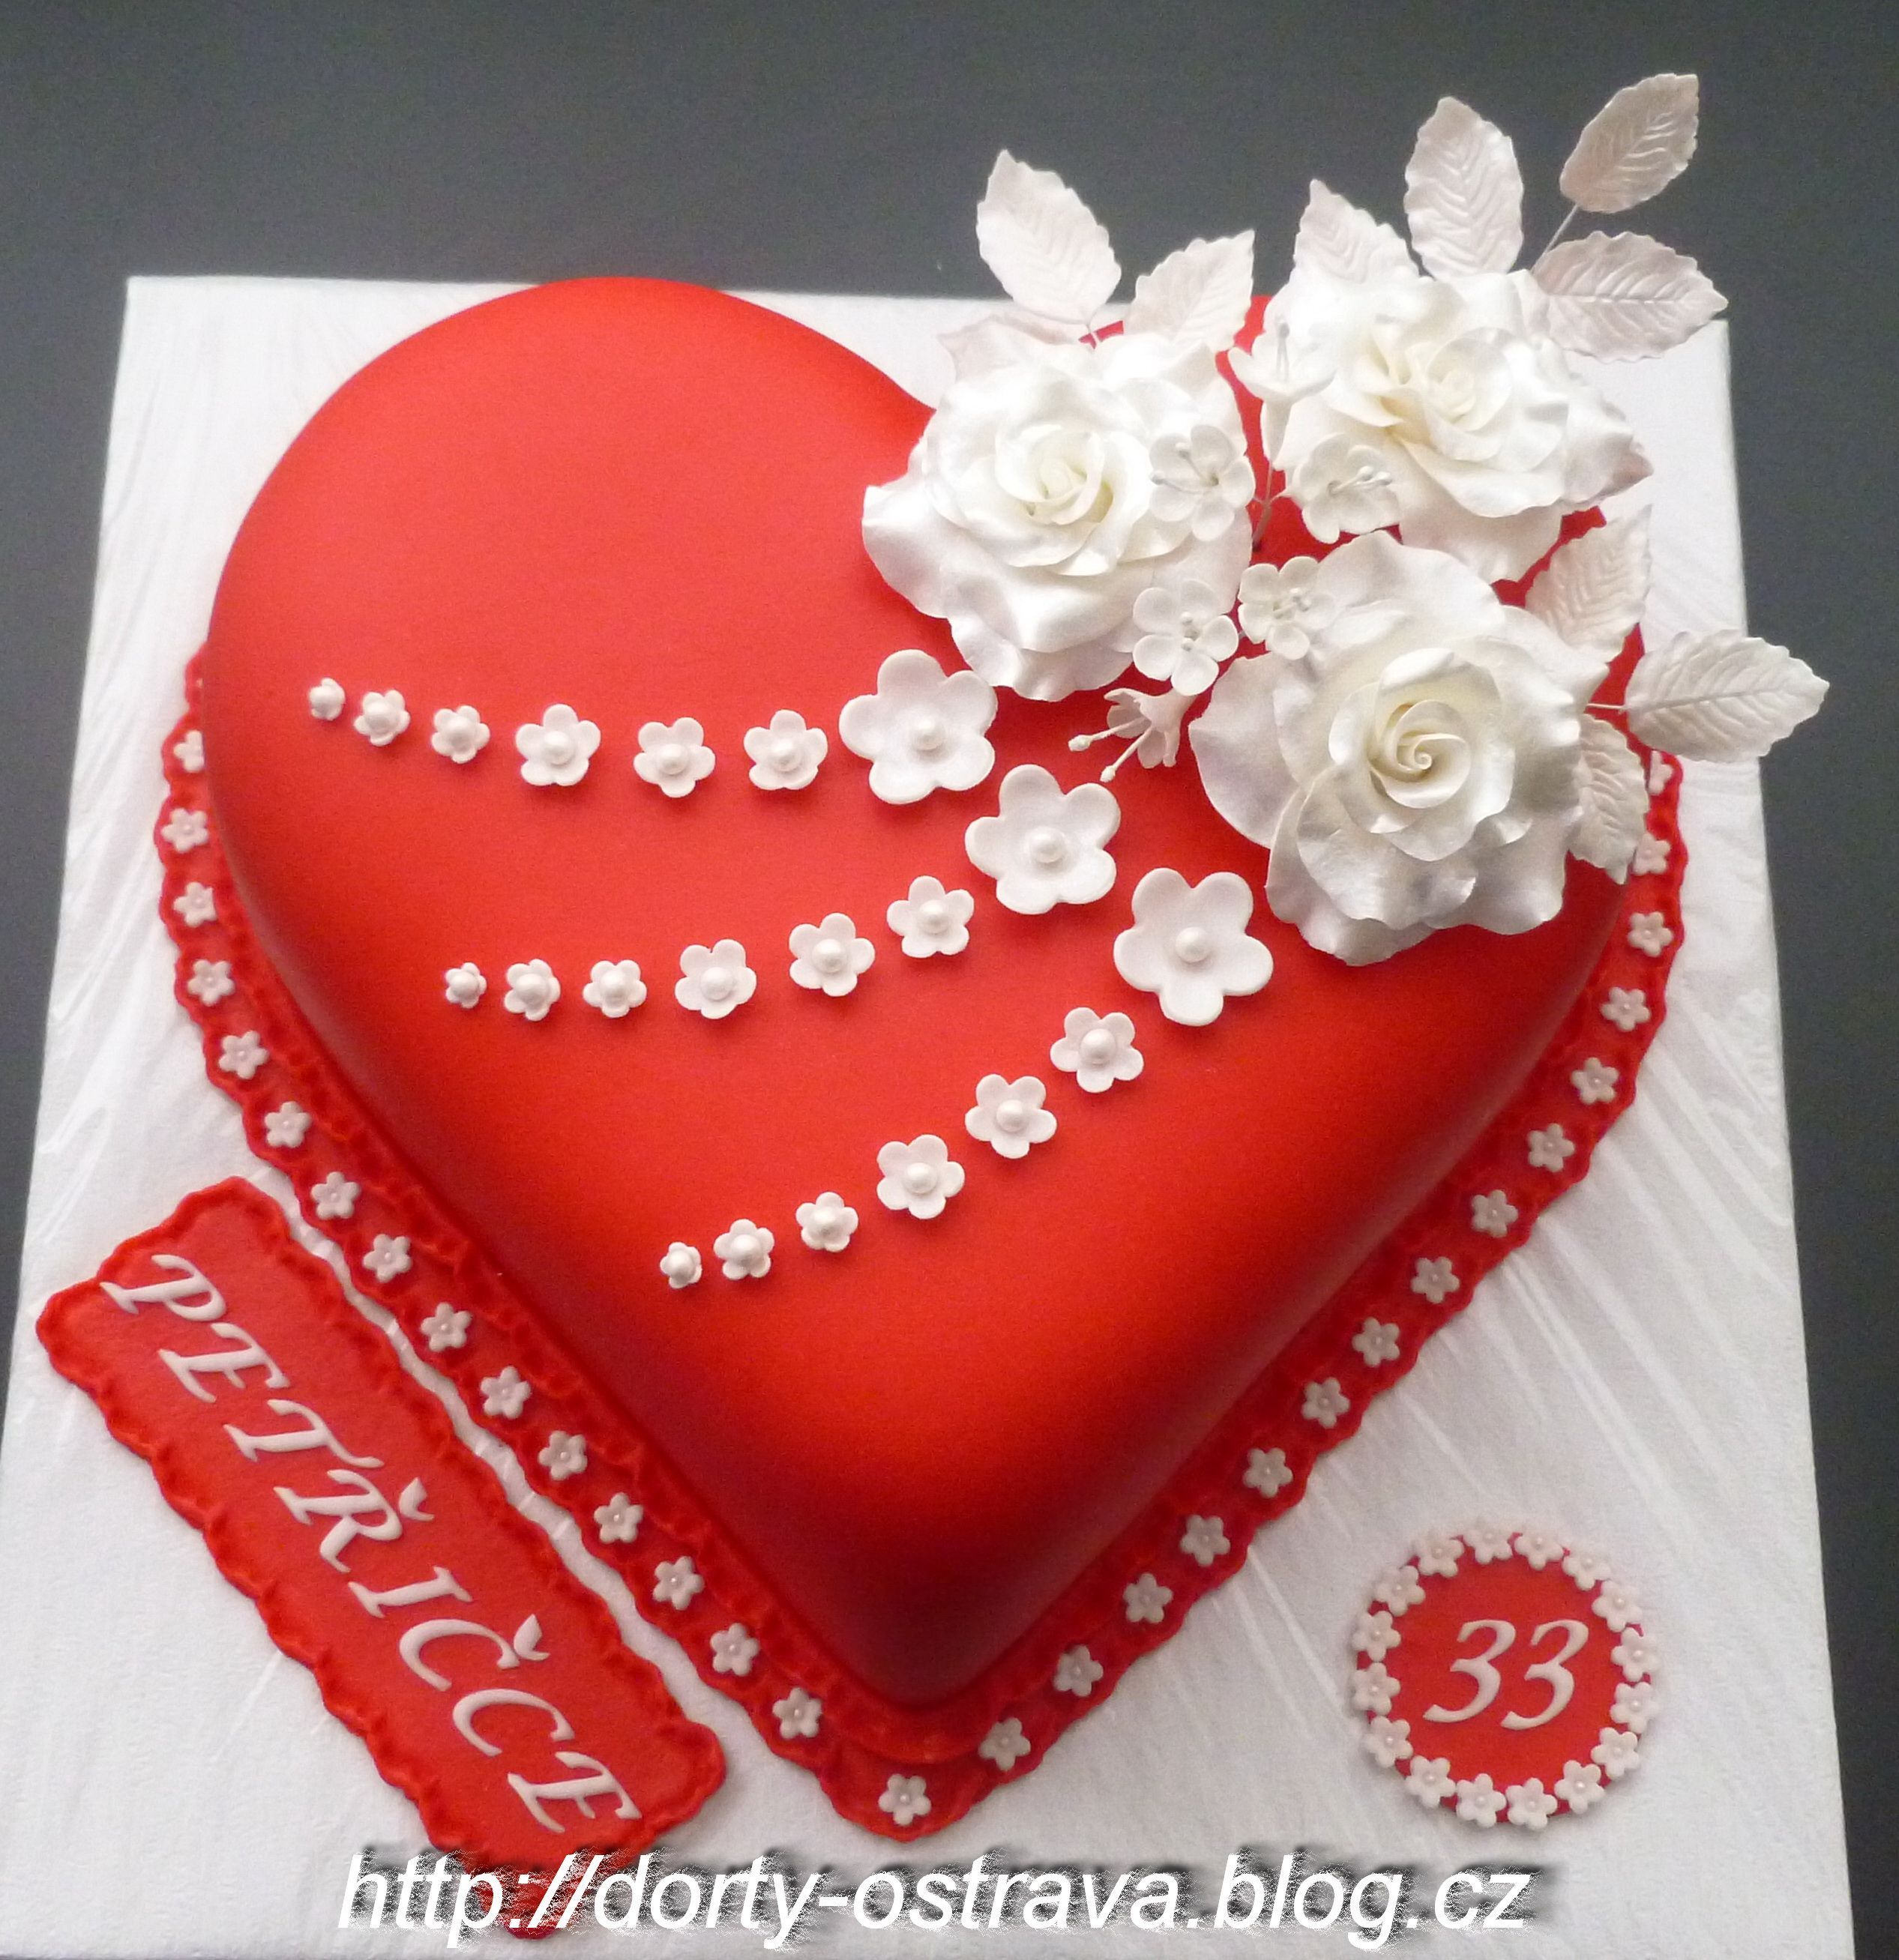 Birthday Cake Photo - Heart birthday .com